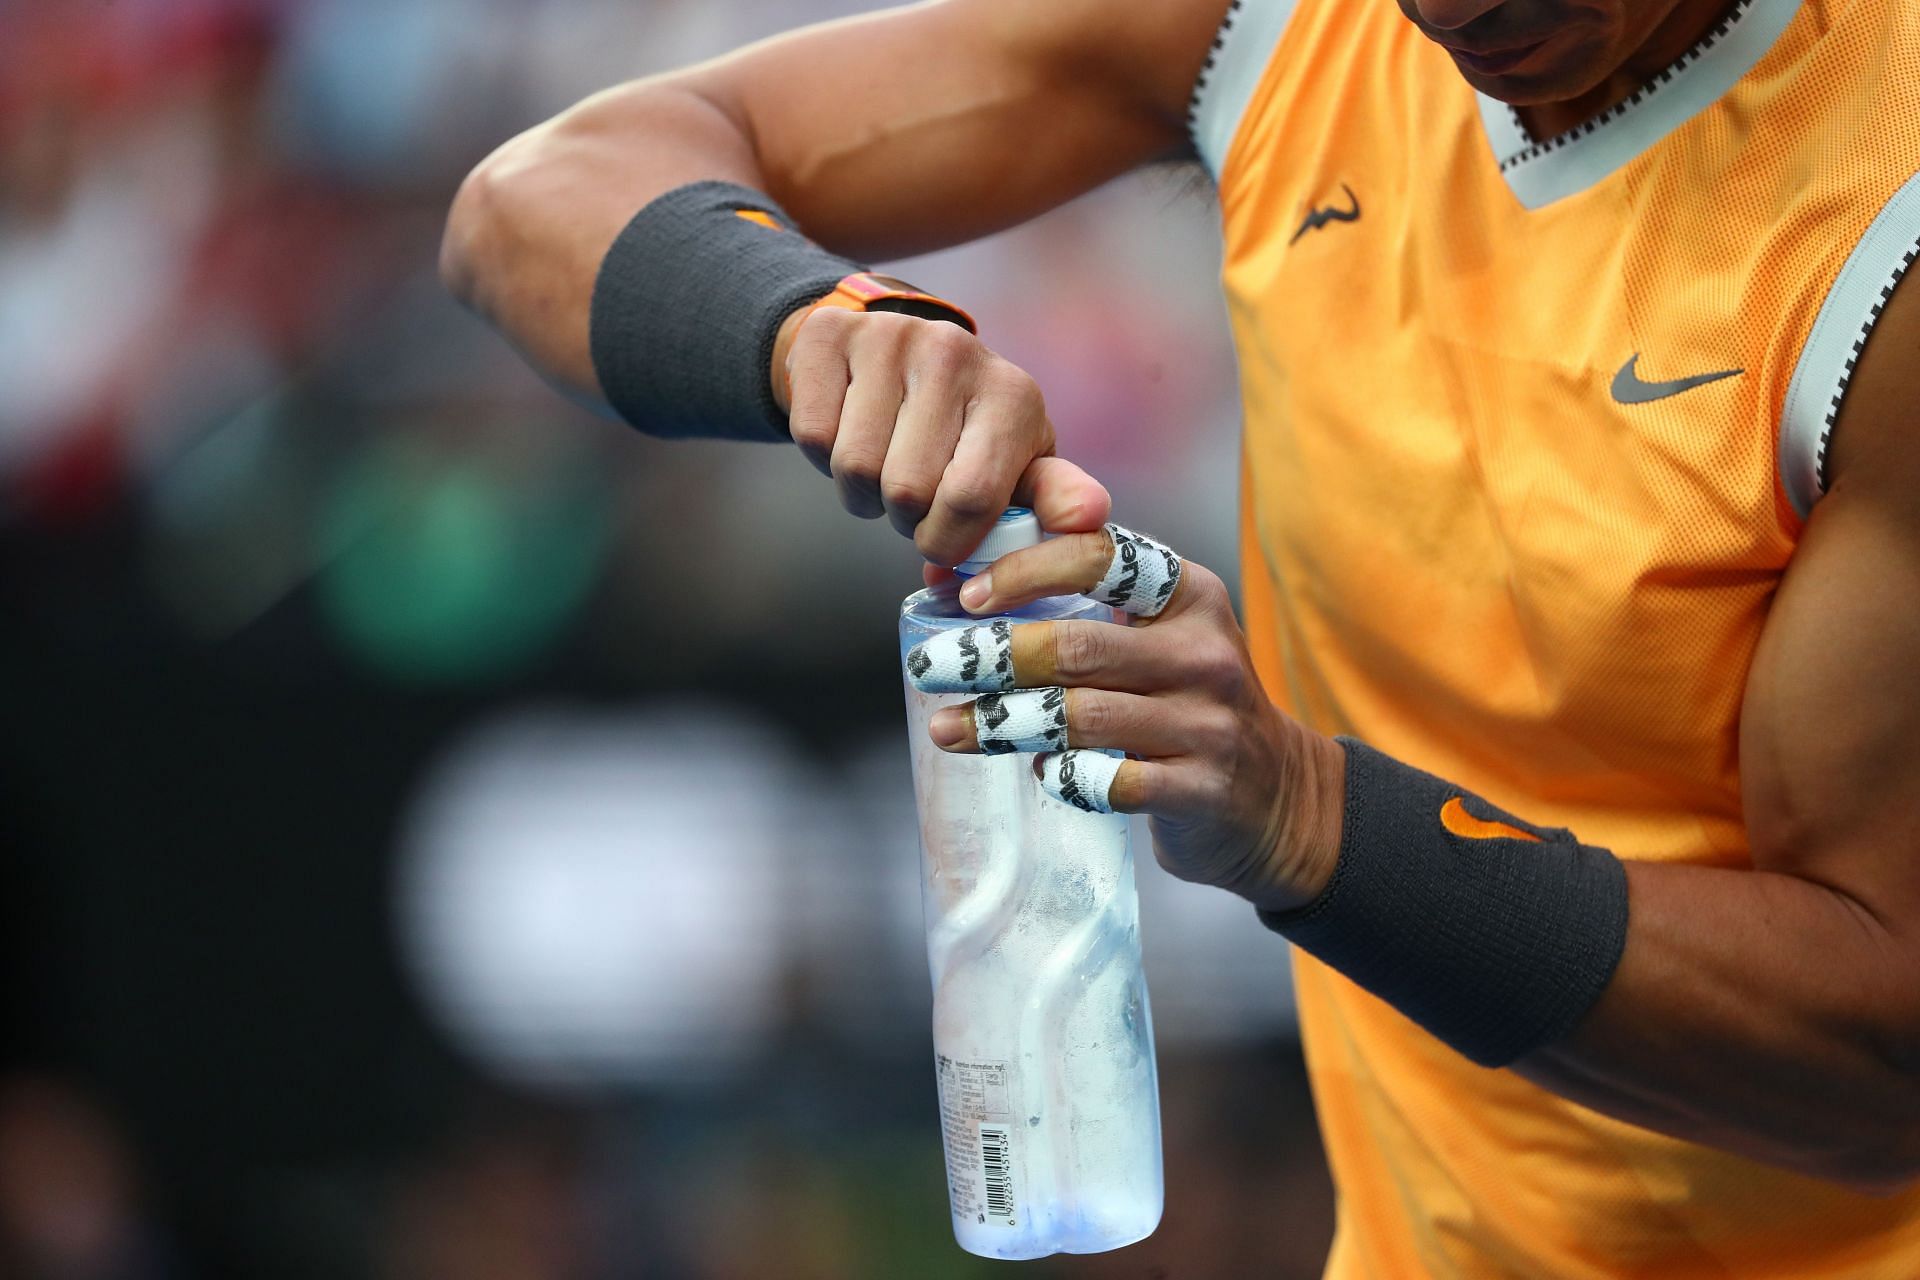 Rafael Nadal opening a bottle of water at the 2019 Australian Open